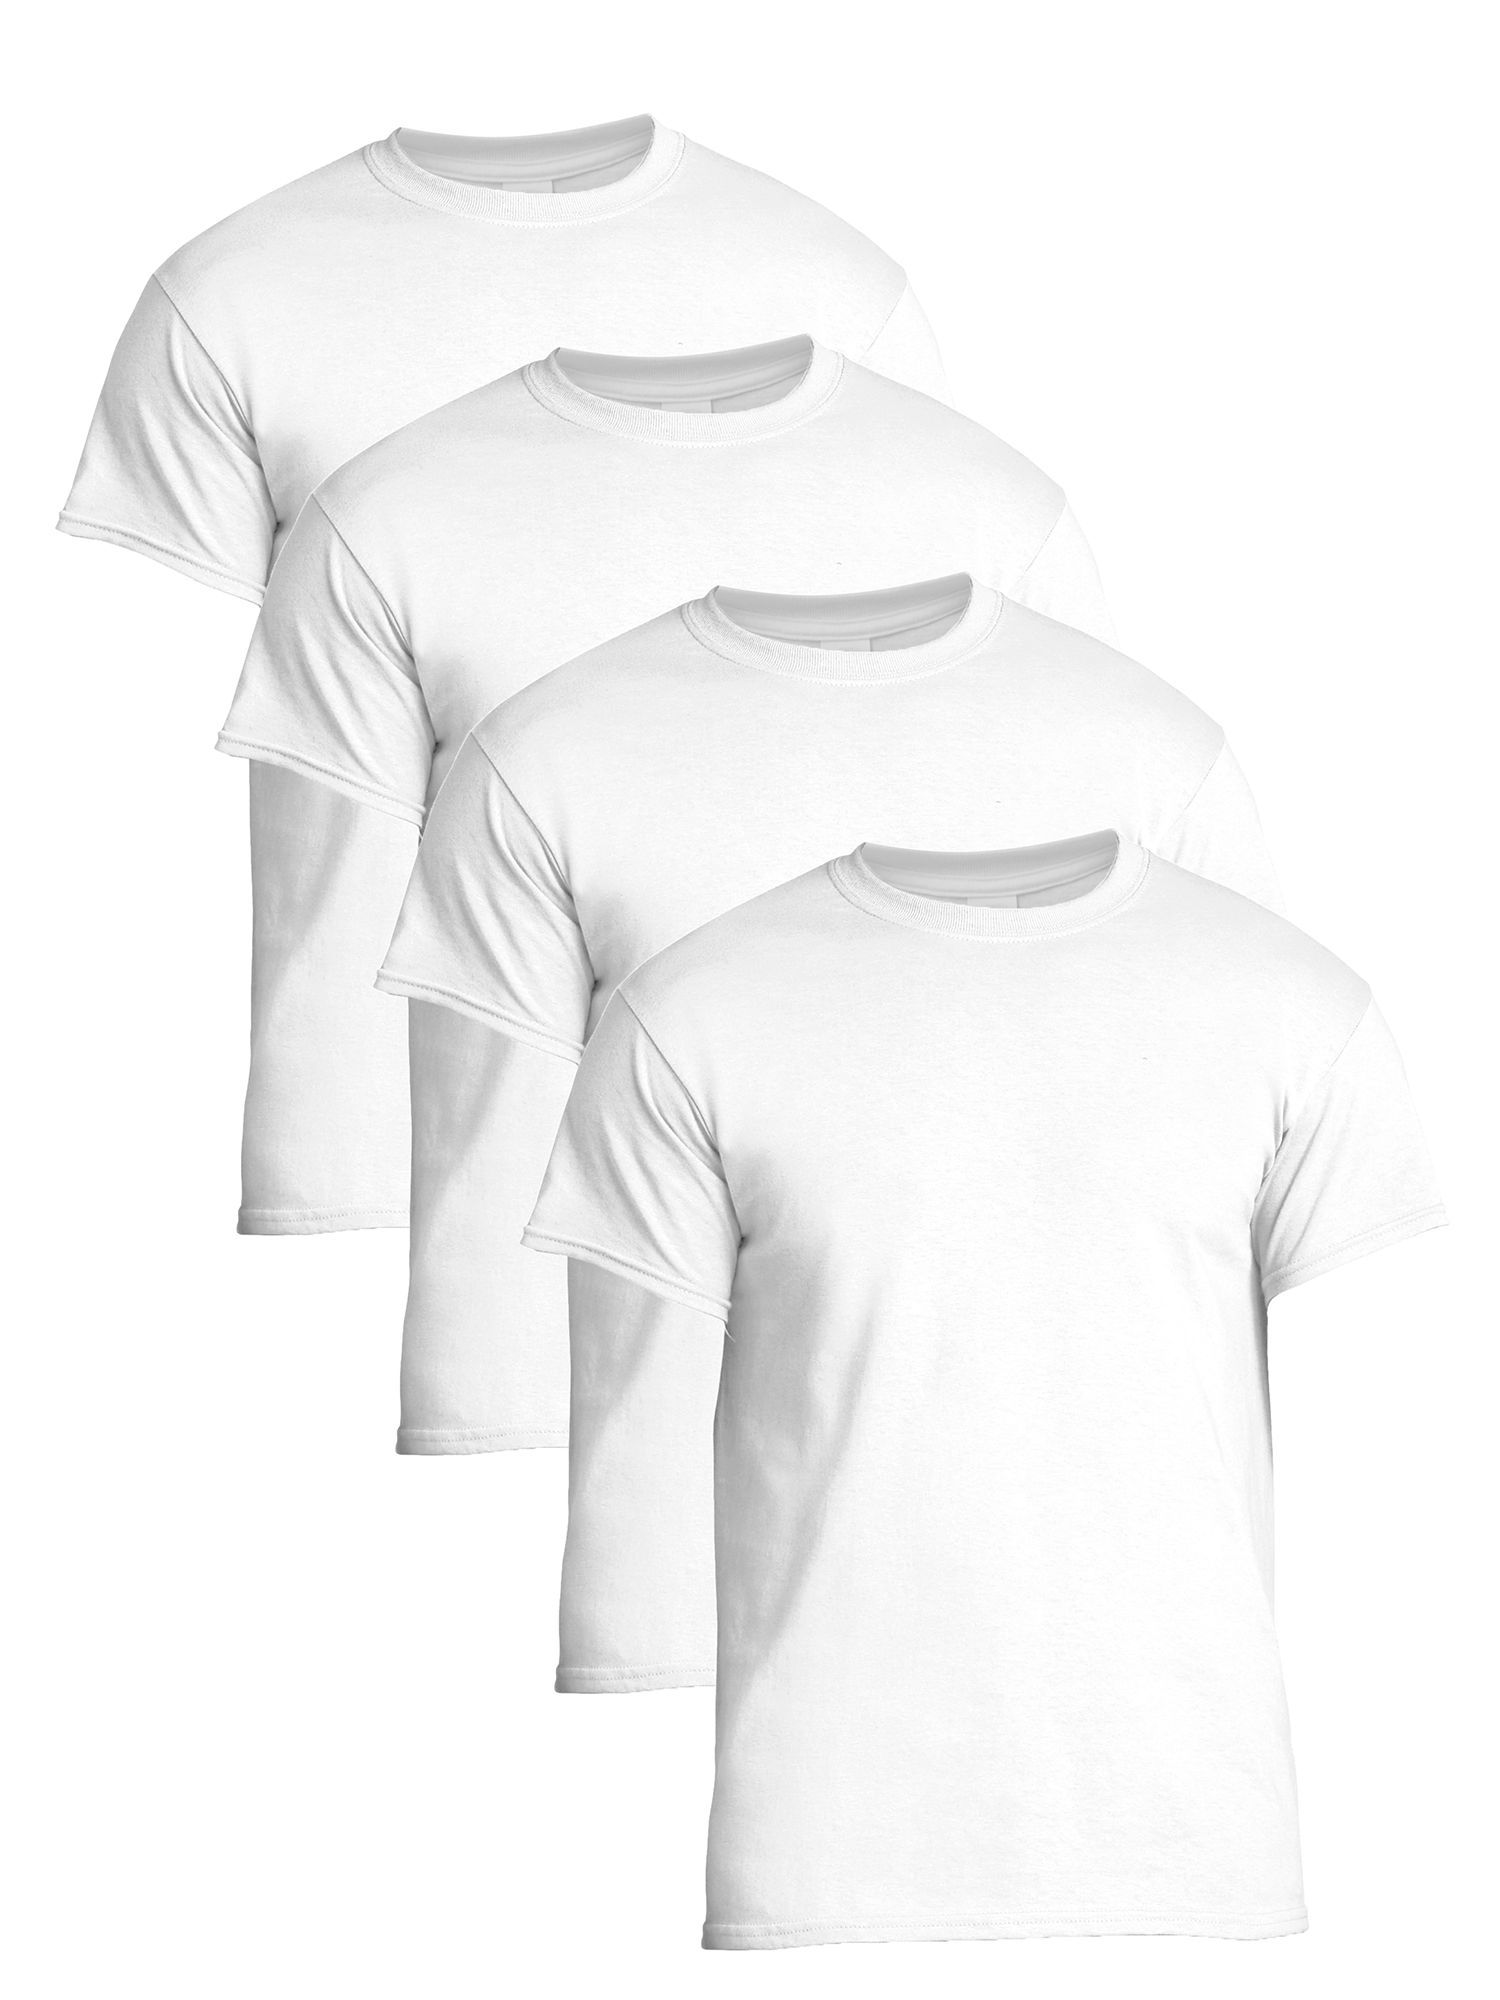 Gildan Men Cotton Short Sleeve White Crew T-Shirt, 4-Pack, Large - image 1 of 9